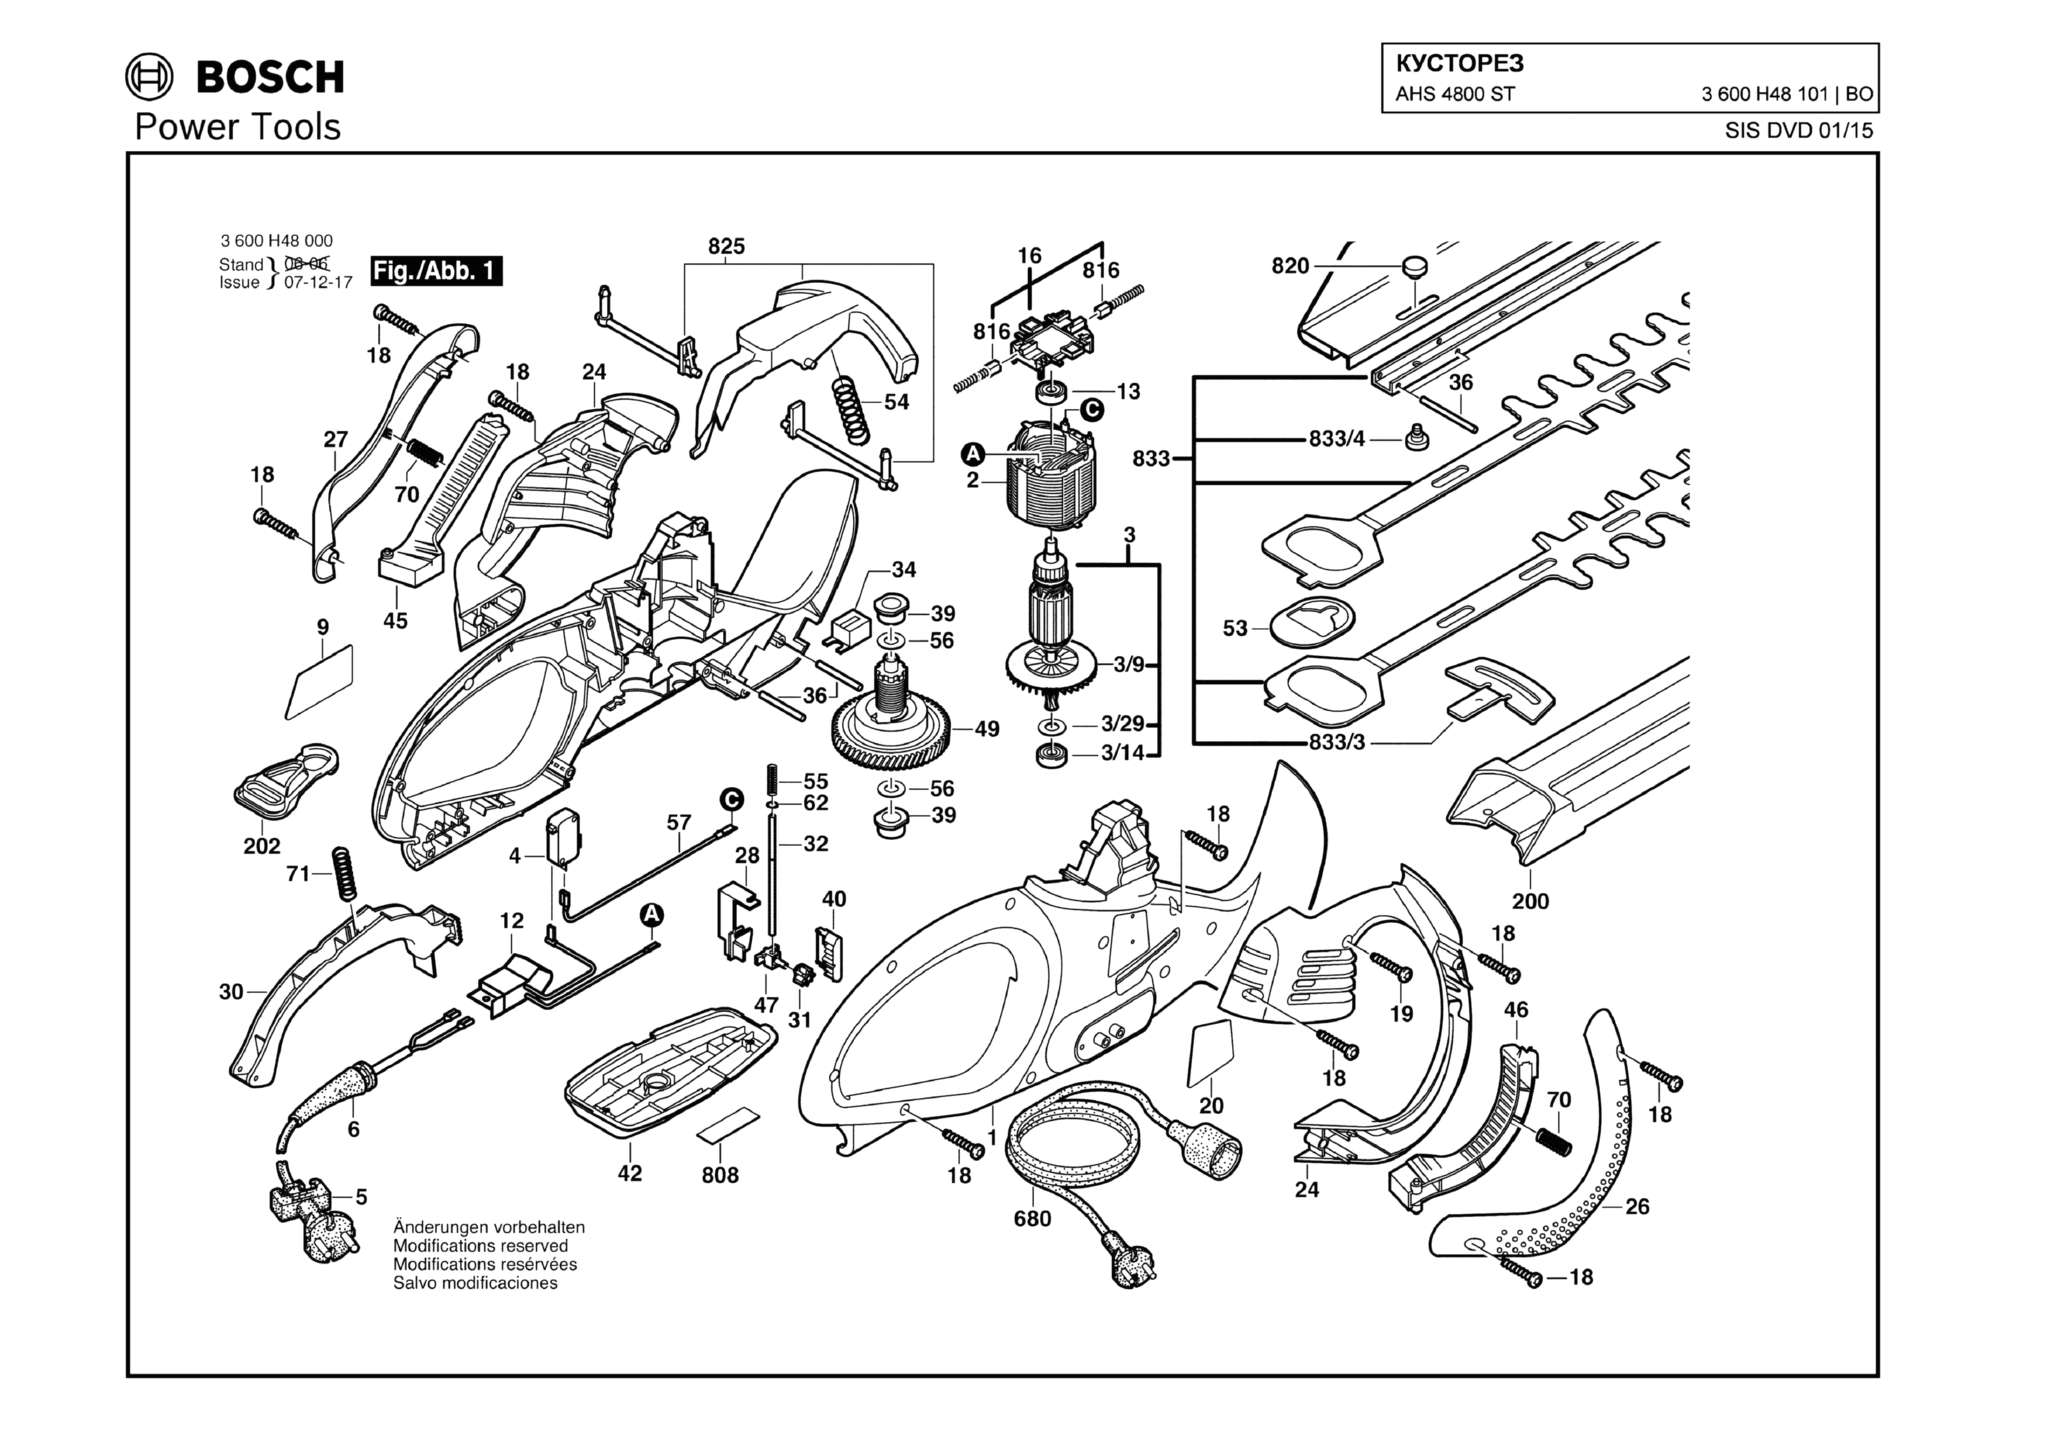 Запчасти, схема и деталировка Bosch AHS 4800 ST (ТИП 3600H48101)